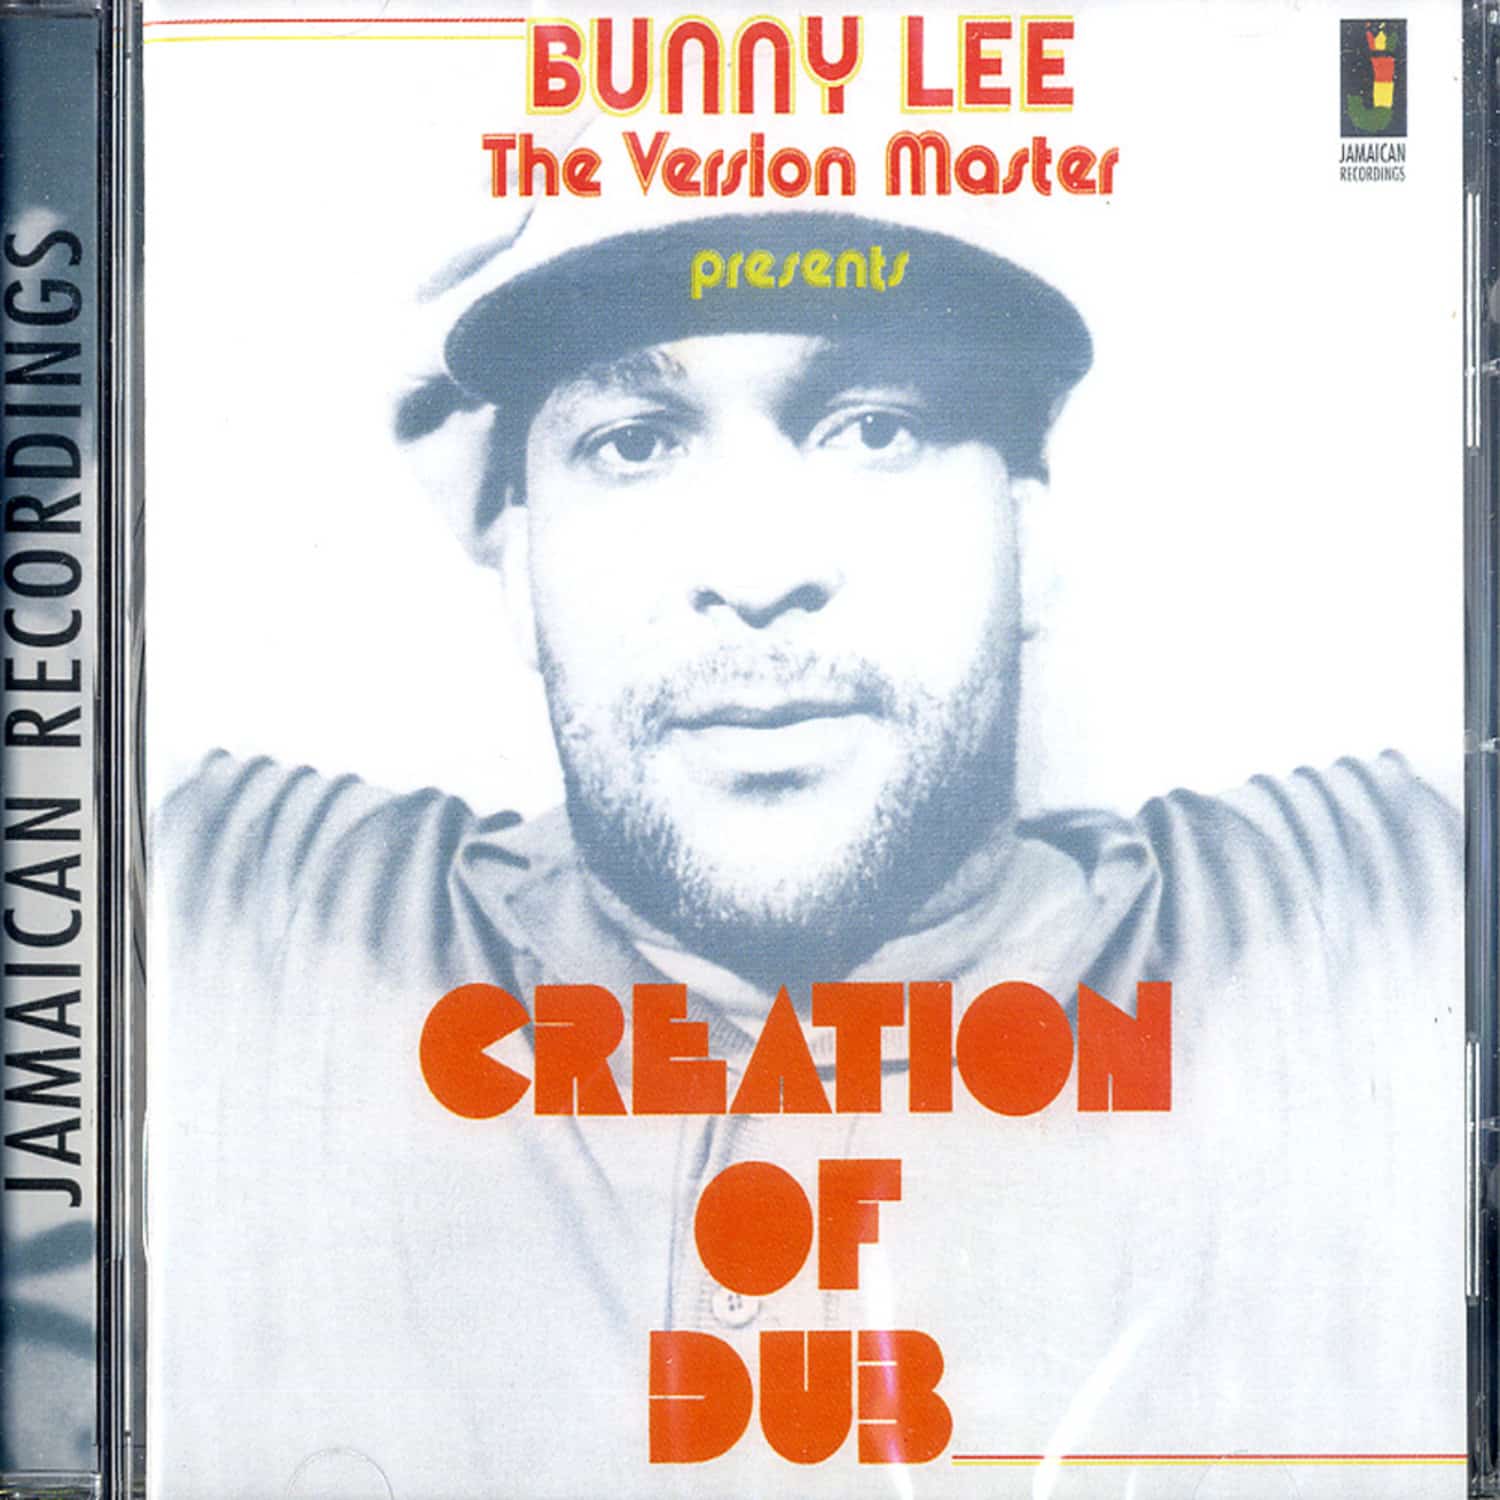 Bunny Lee - CREATION OF DUB 